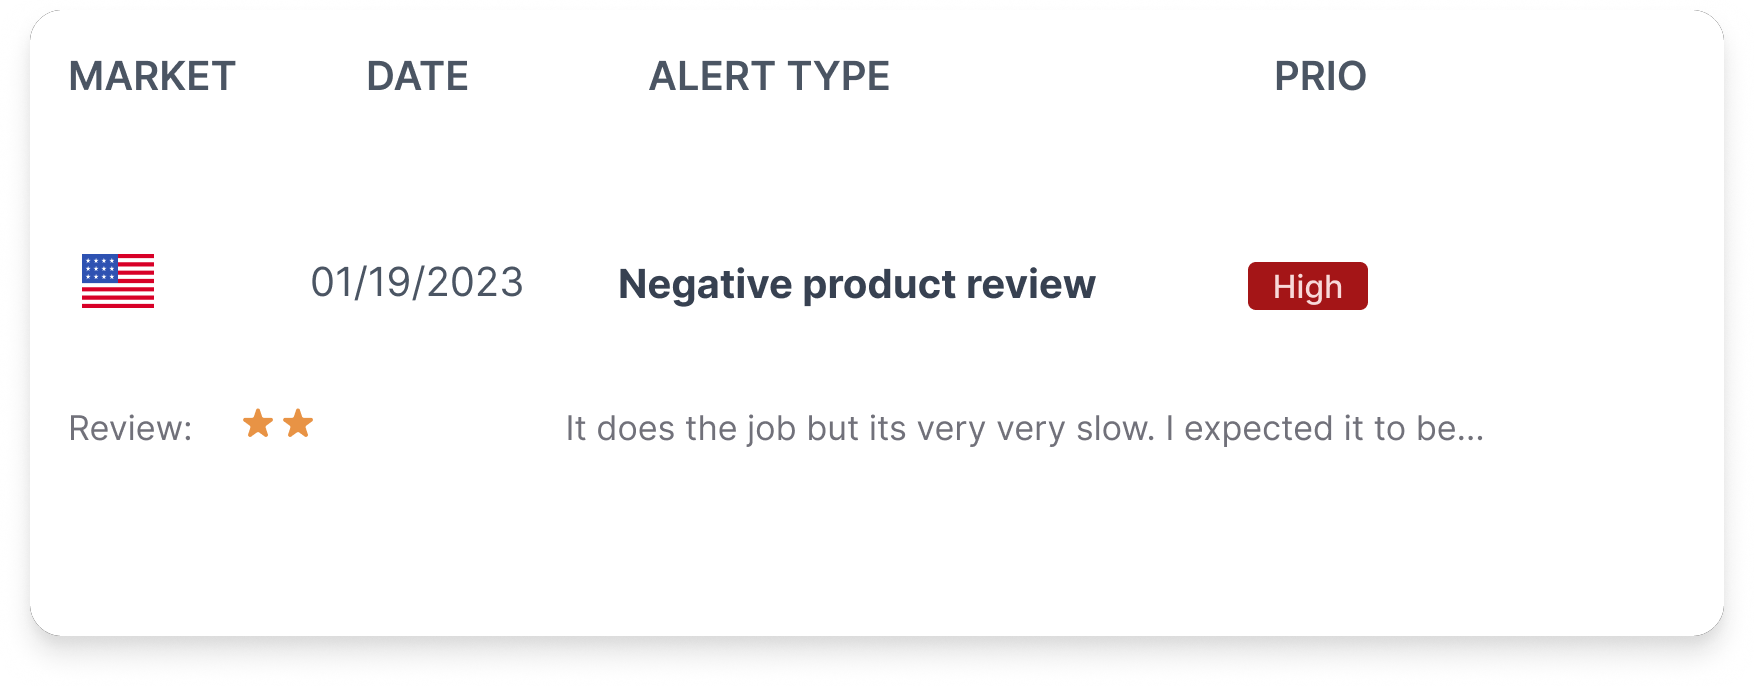 Amazon Alert Negative product review